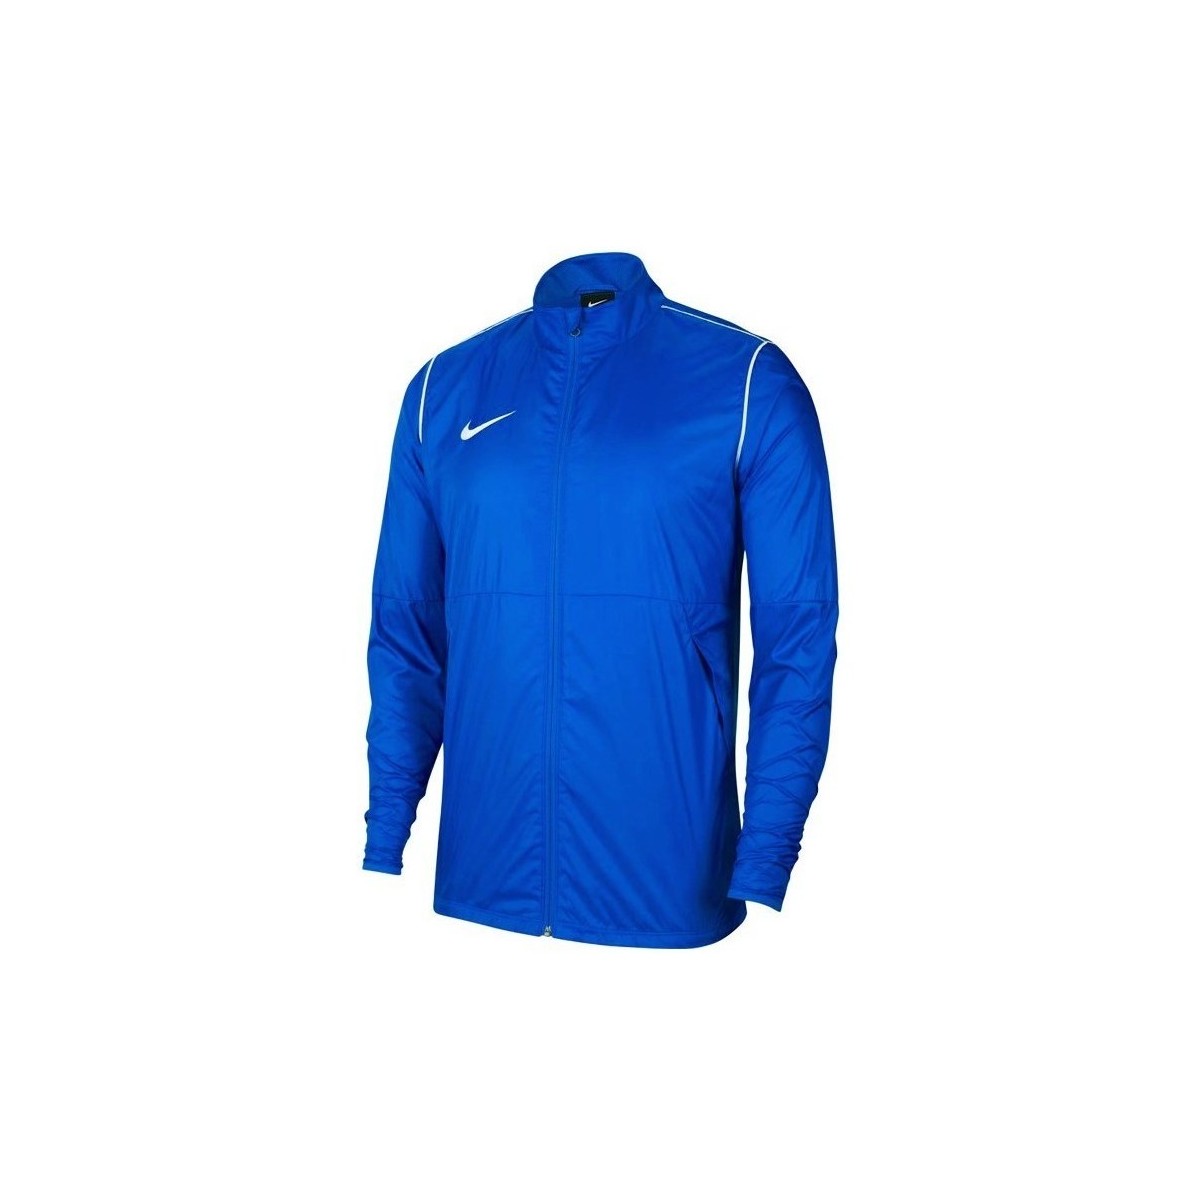 Kleidung Jungen Jacken Nike JR Park 20 Repel Blau